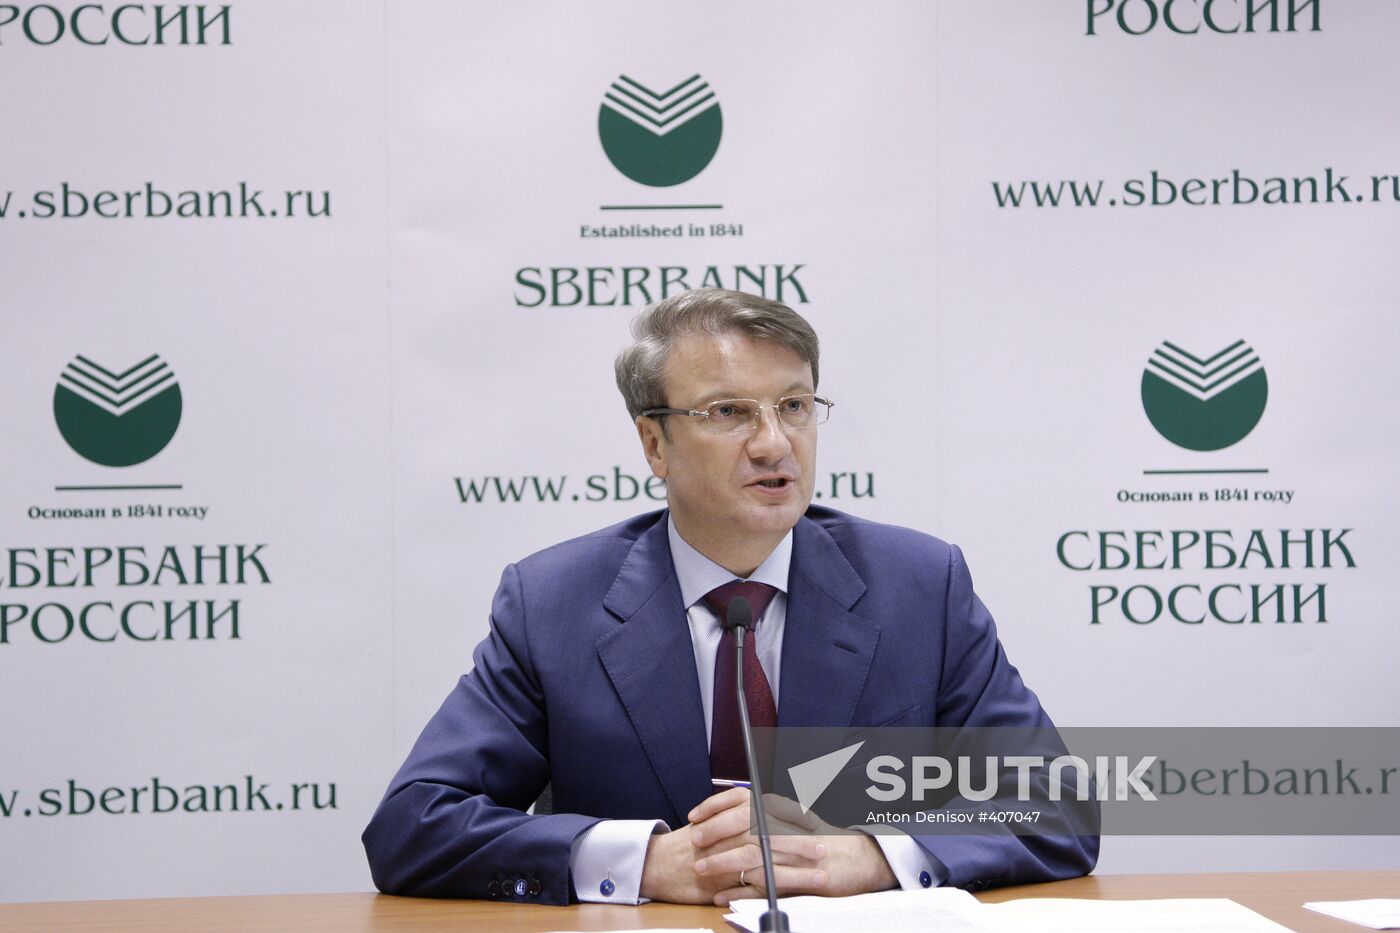 Annual meeting of Sberbank shareholders